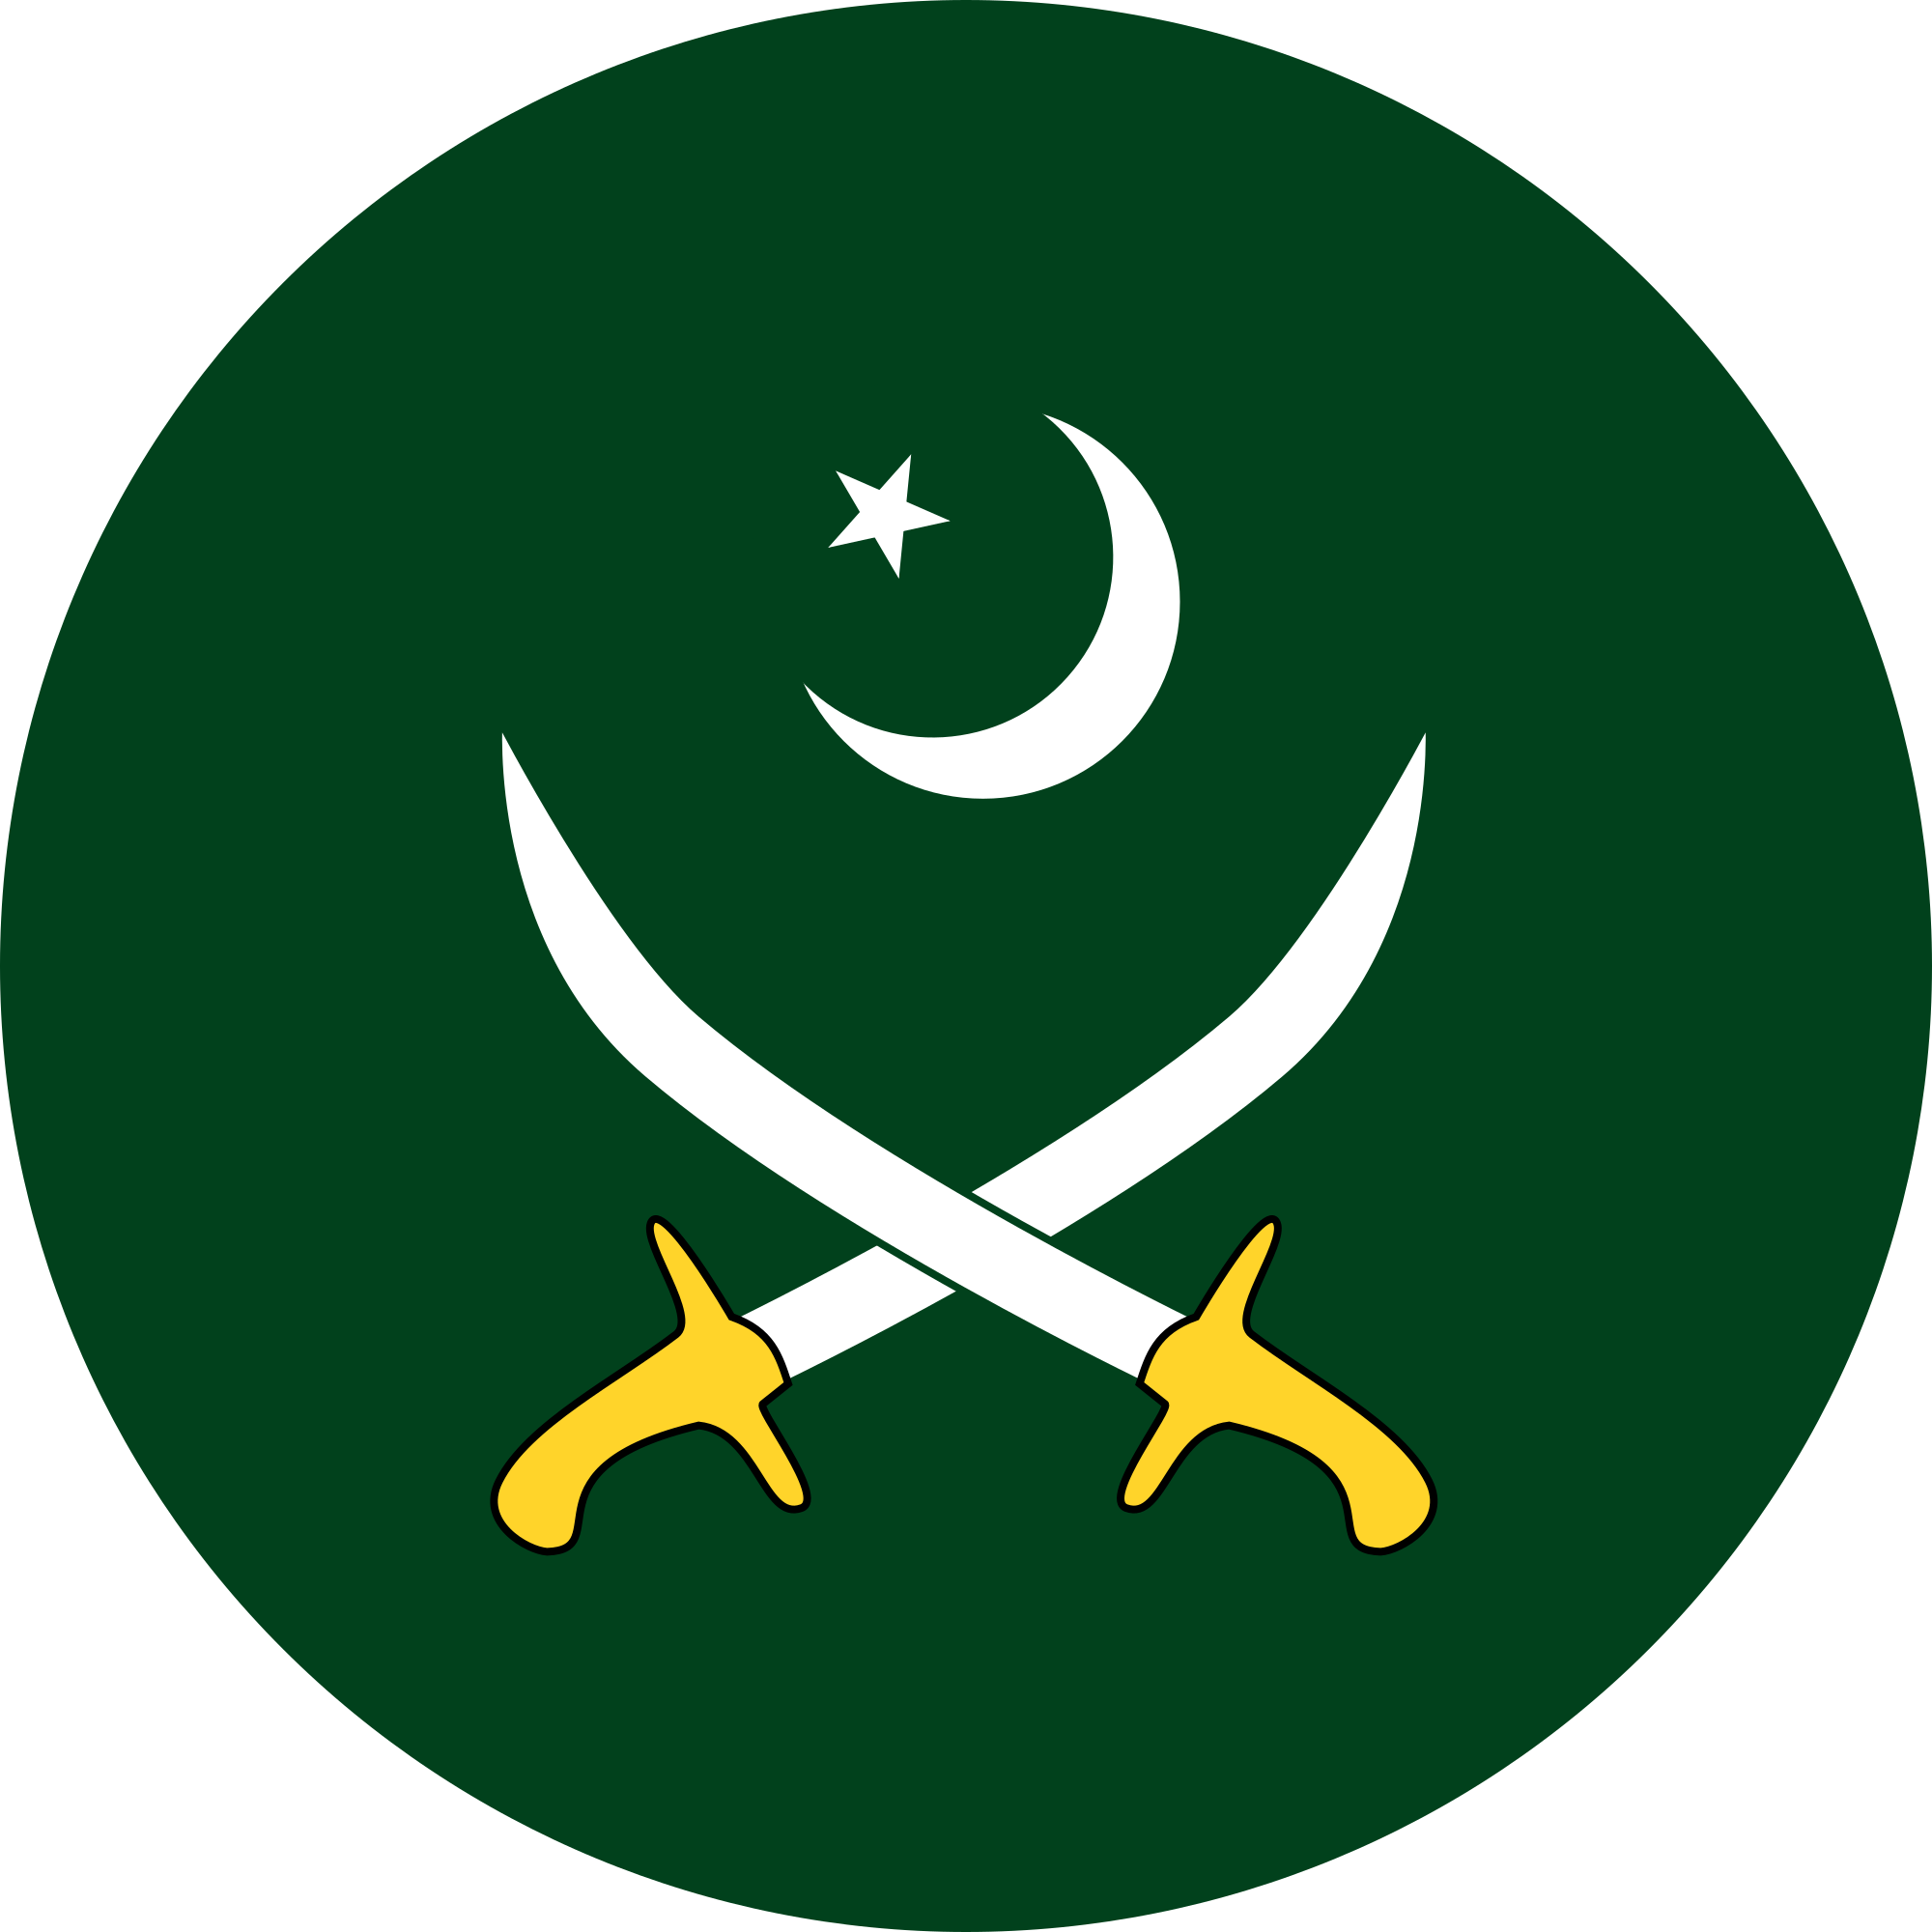 Pakistan_Army_Emblem.png